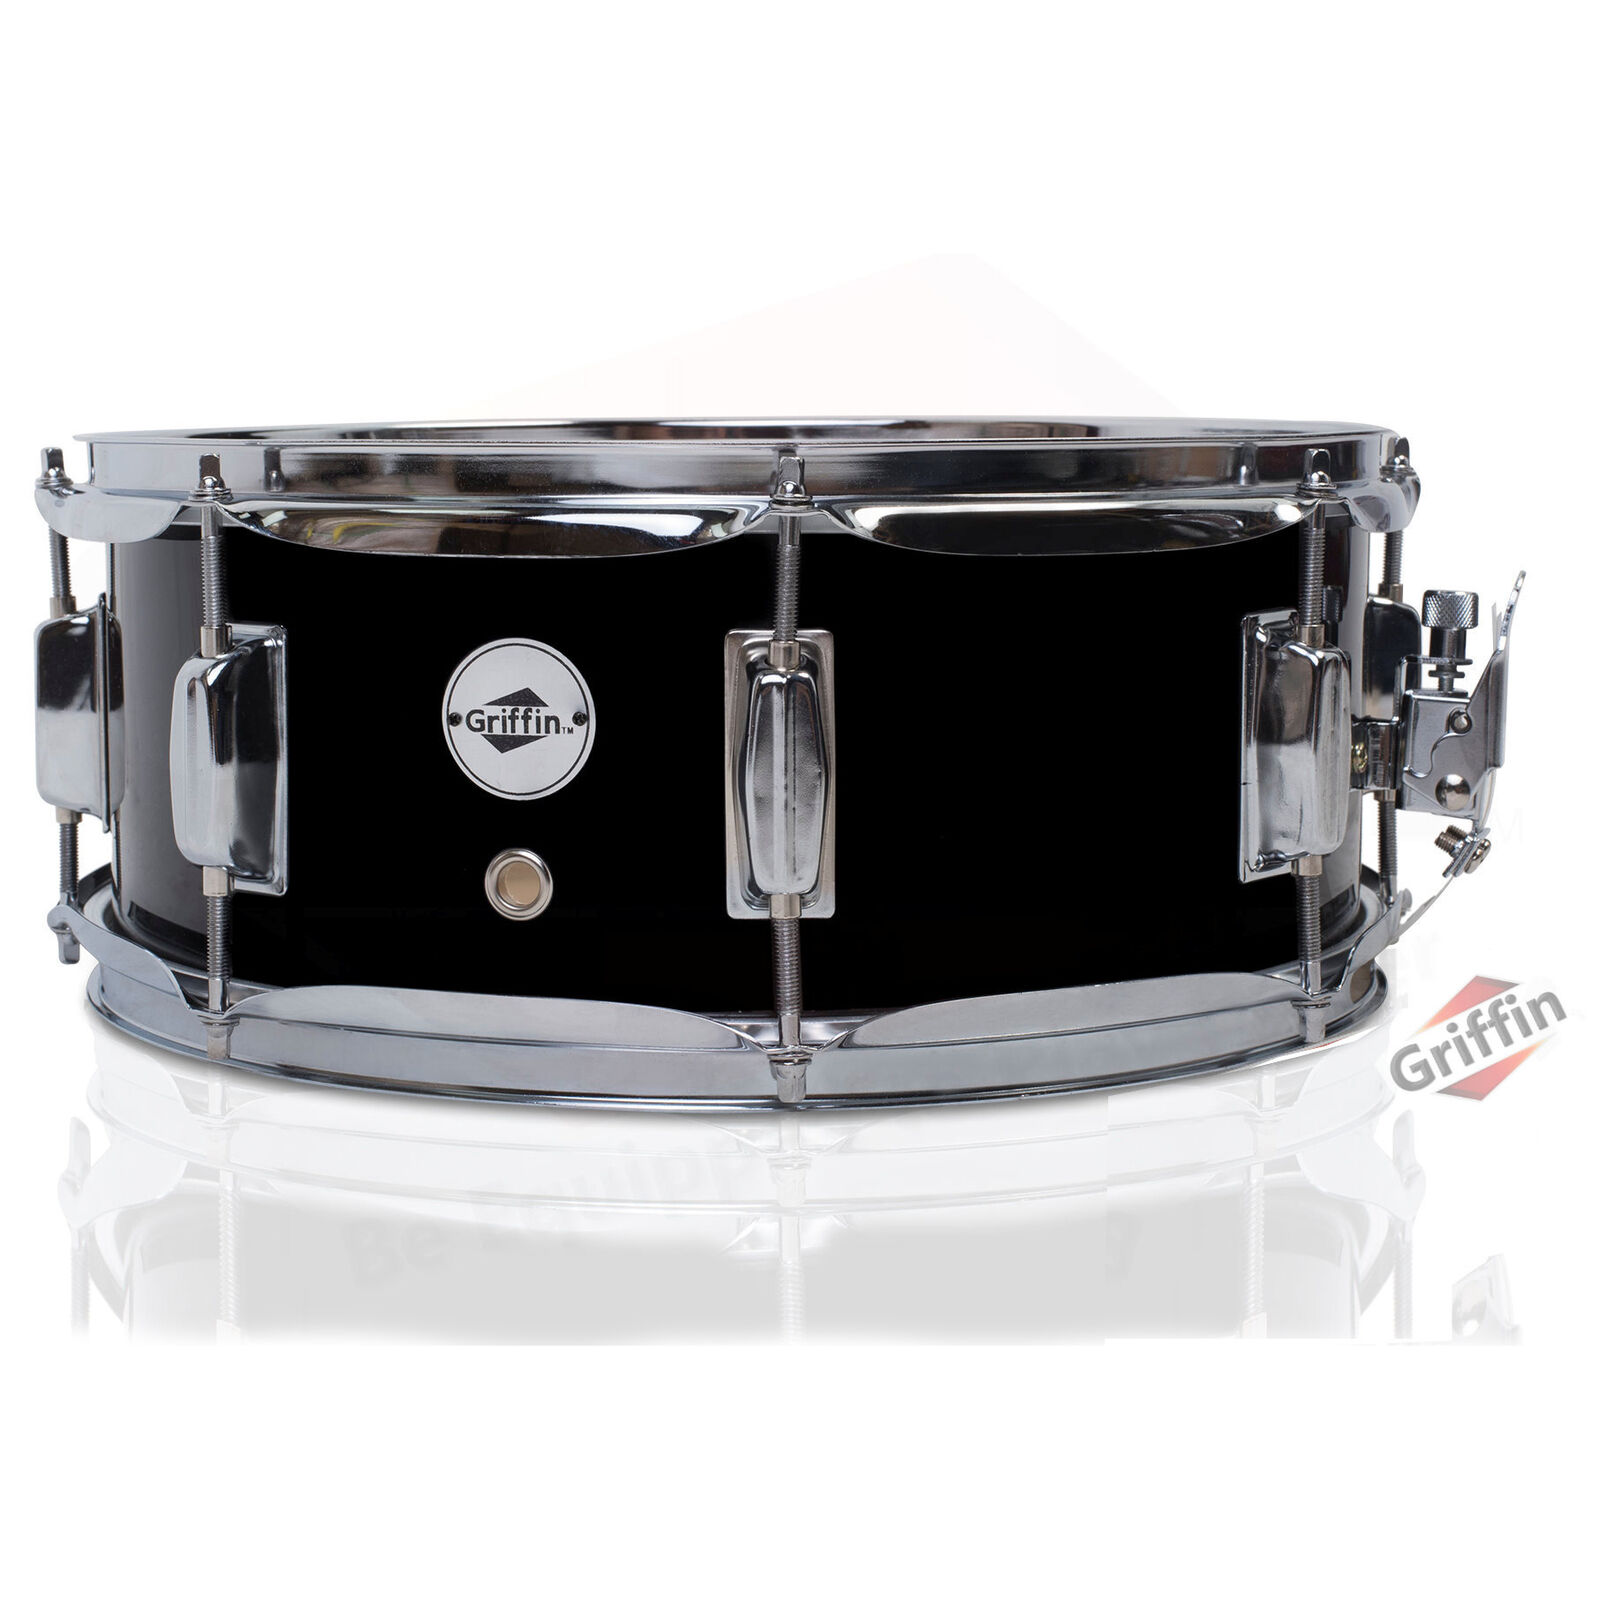 GRIFFIN Snare Drum - Black 14